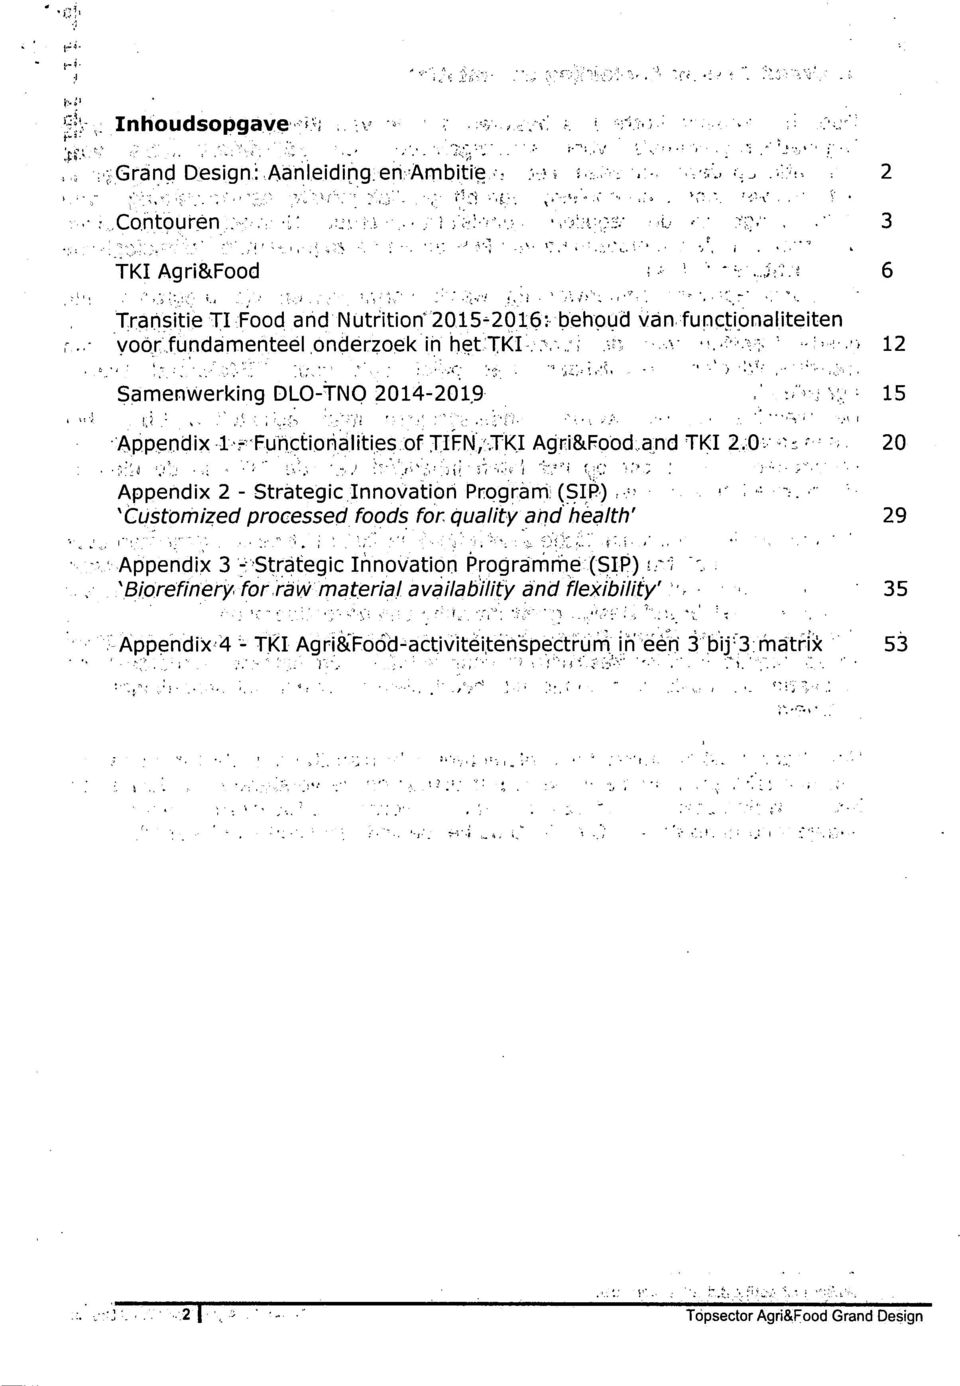 '^, - - '> Samenwerking DLO-TNQ 2014-2019 : ; v:.;^ 15 Appendix 1 f-fuhçtiohalities of JIFN/TKI Agri&Food.and TKI 2.0 v - ^ 20 Appendix 2 - Strategie Innovation Program: (SIP) : ^.